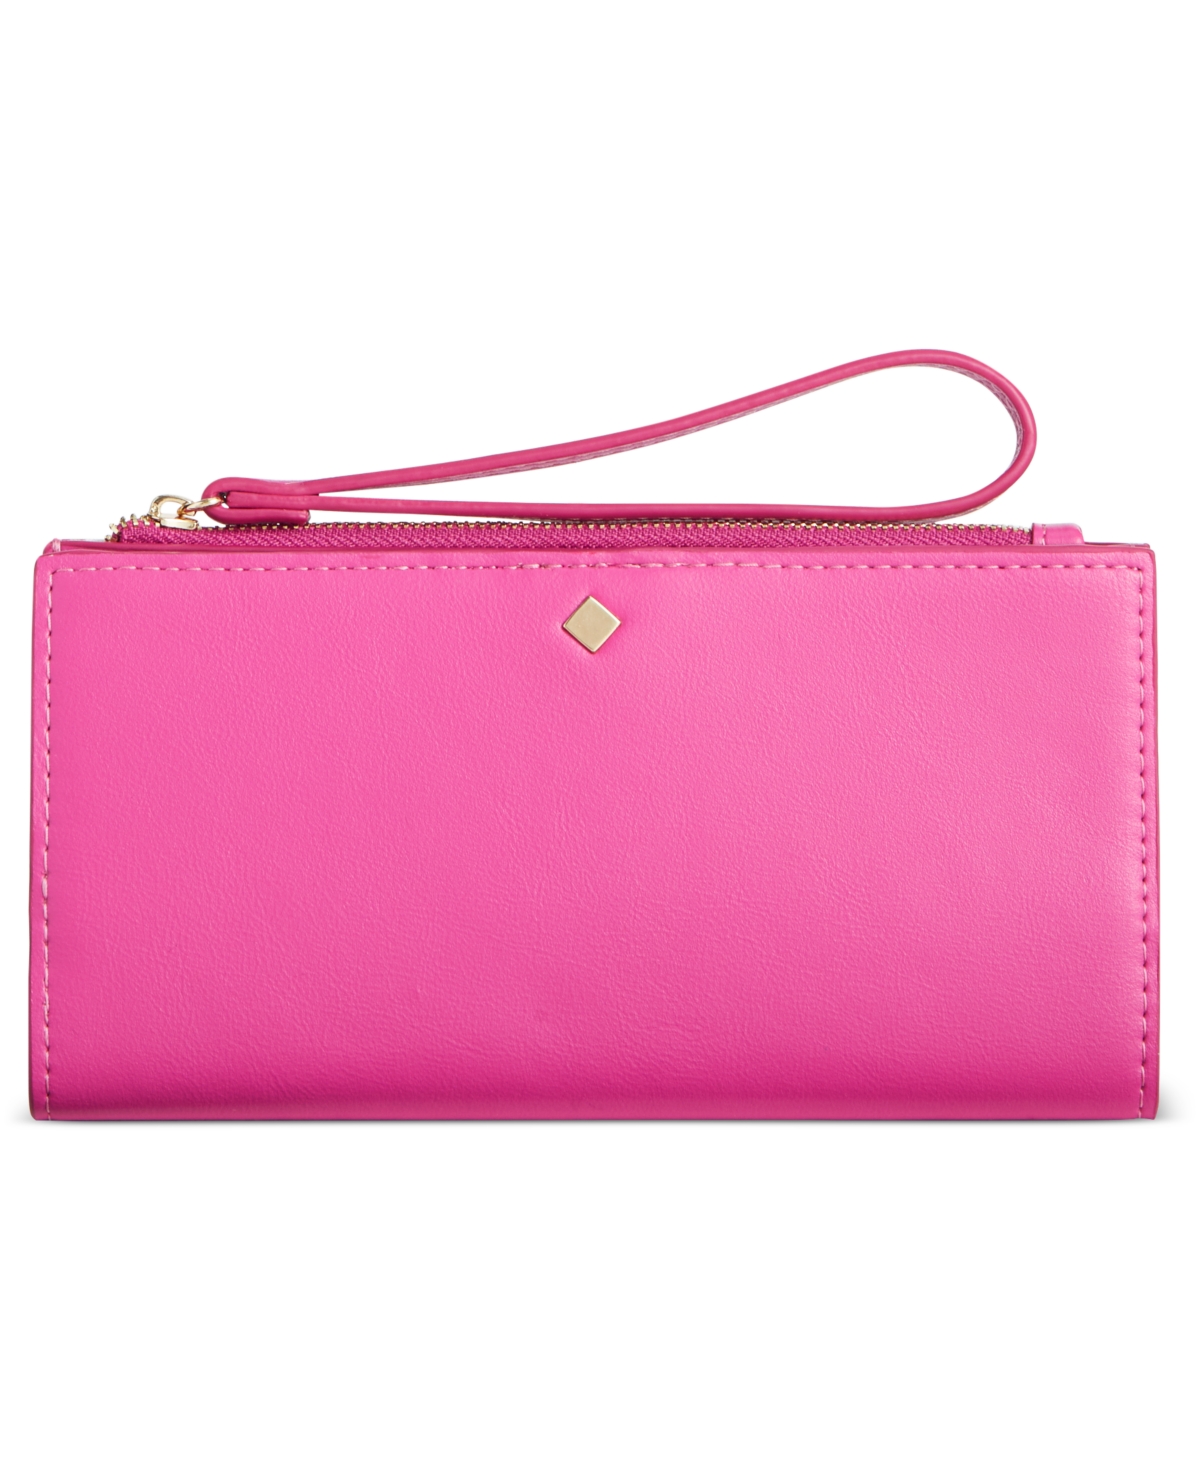 Angii Wristlet Wallet, Created for Macy's - Fuchsia Purple